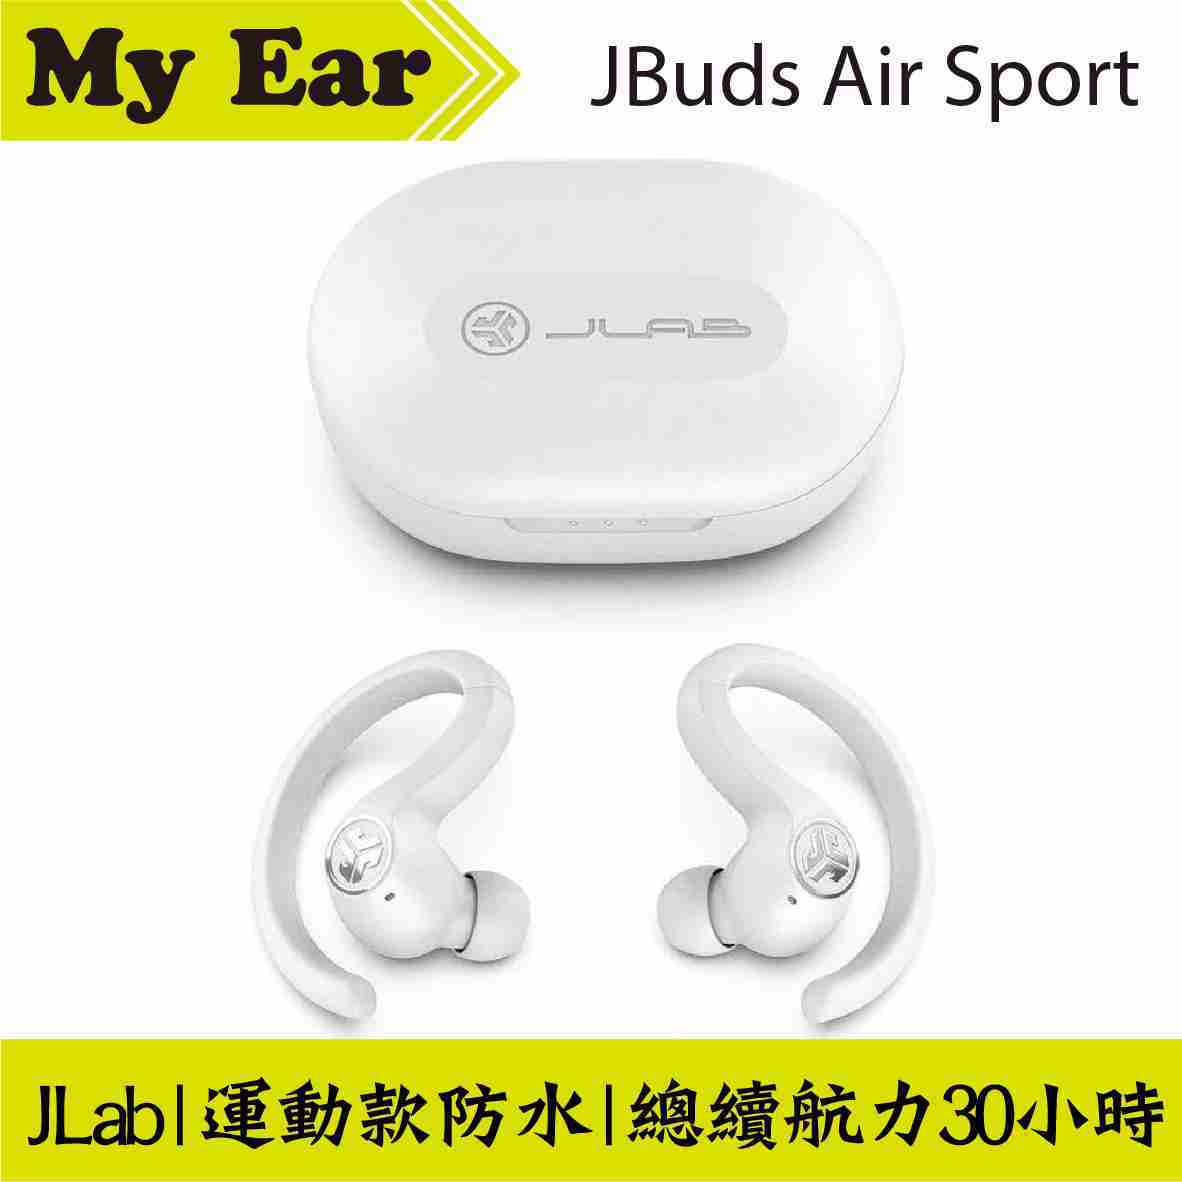 JLAB JBuds Air Sport 真無線藍芽耳機 耳掛式 白色 | My Ear耳機專賣店